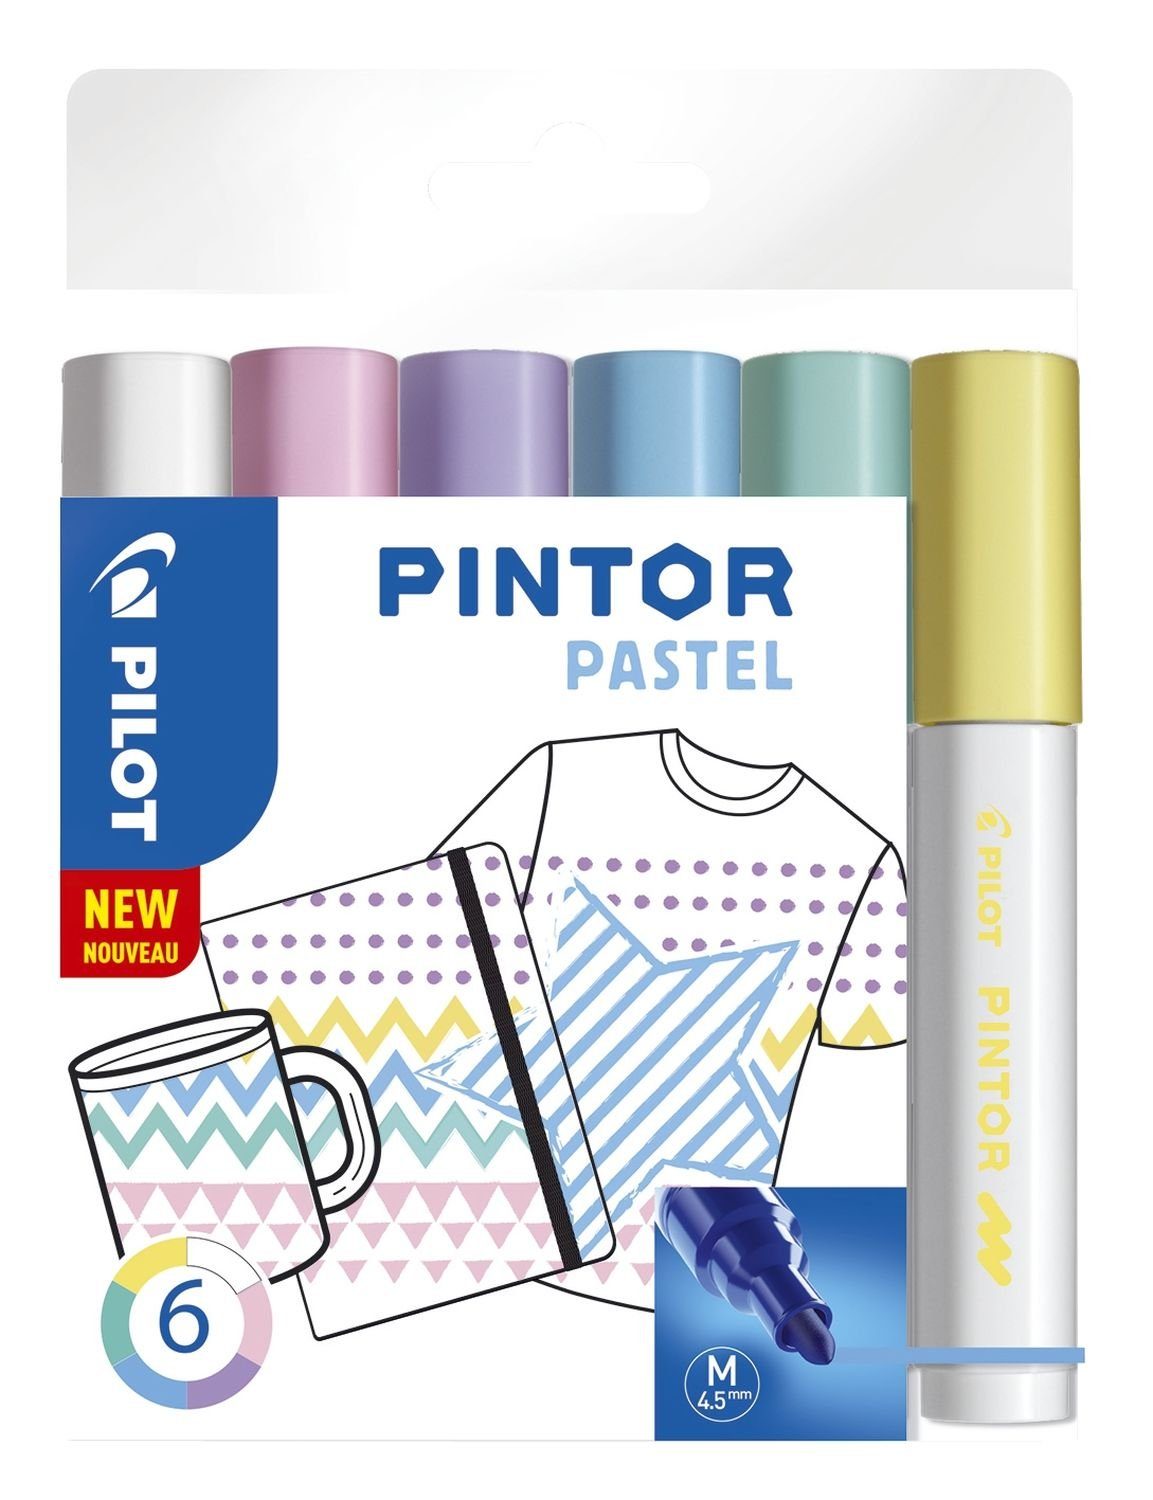 PILOT PILOT Pigmentmarker Set "PASTEL" 6er Tintenpatrone PINTOR, medium